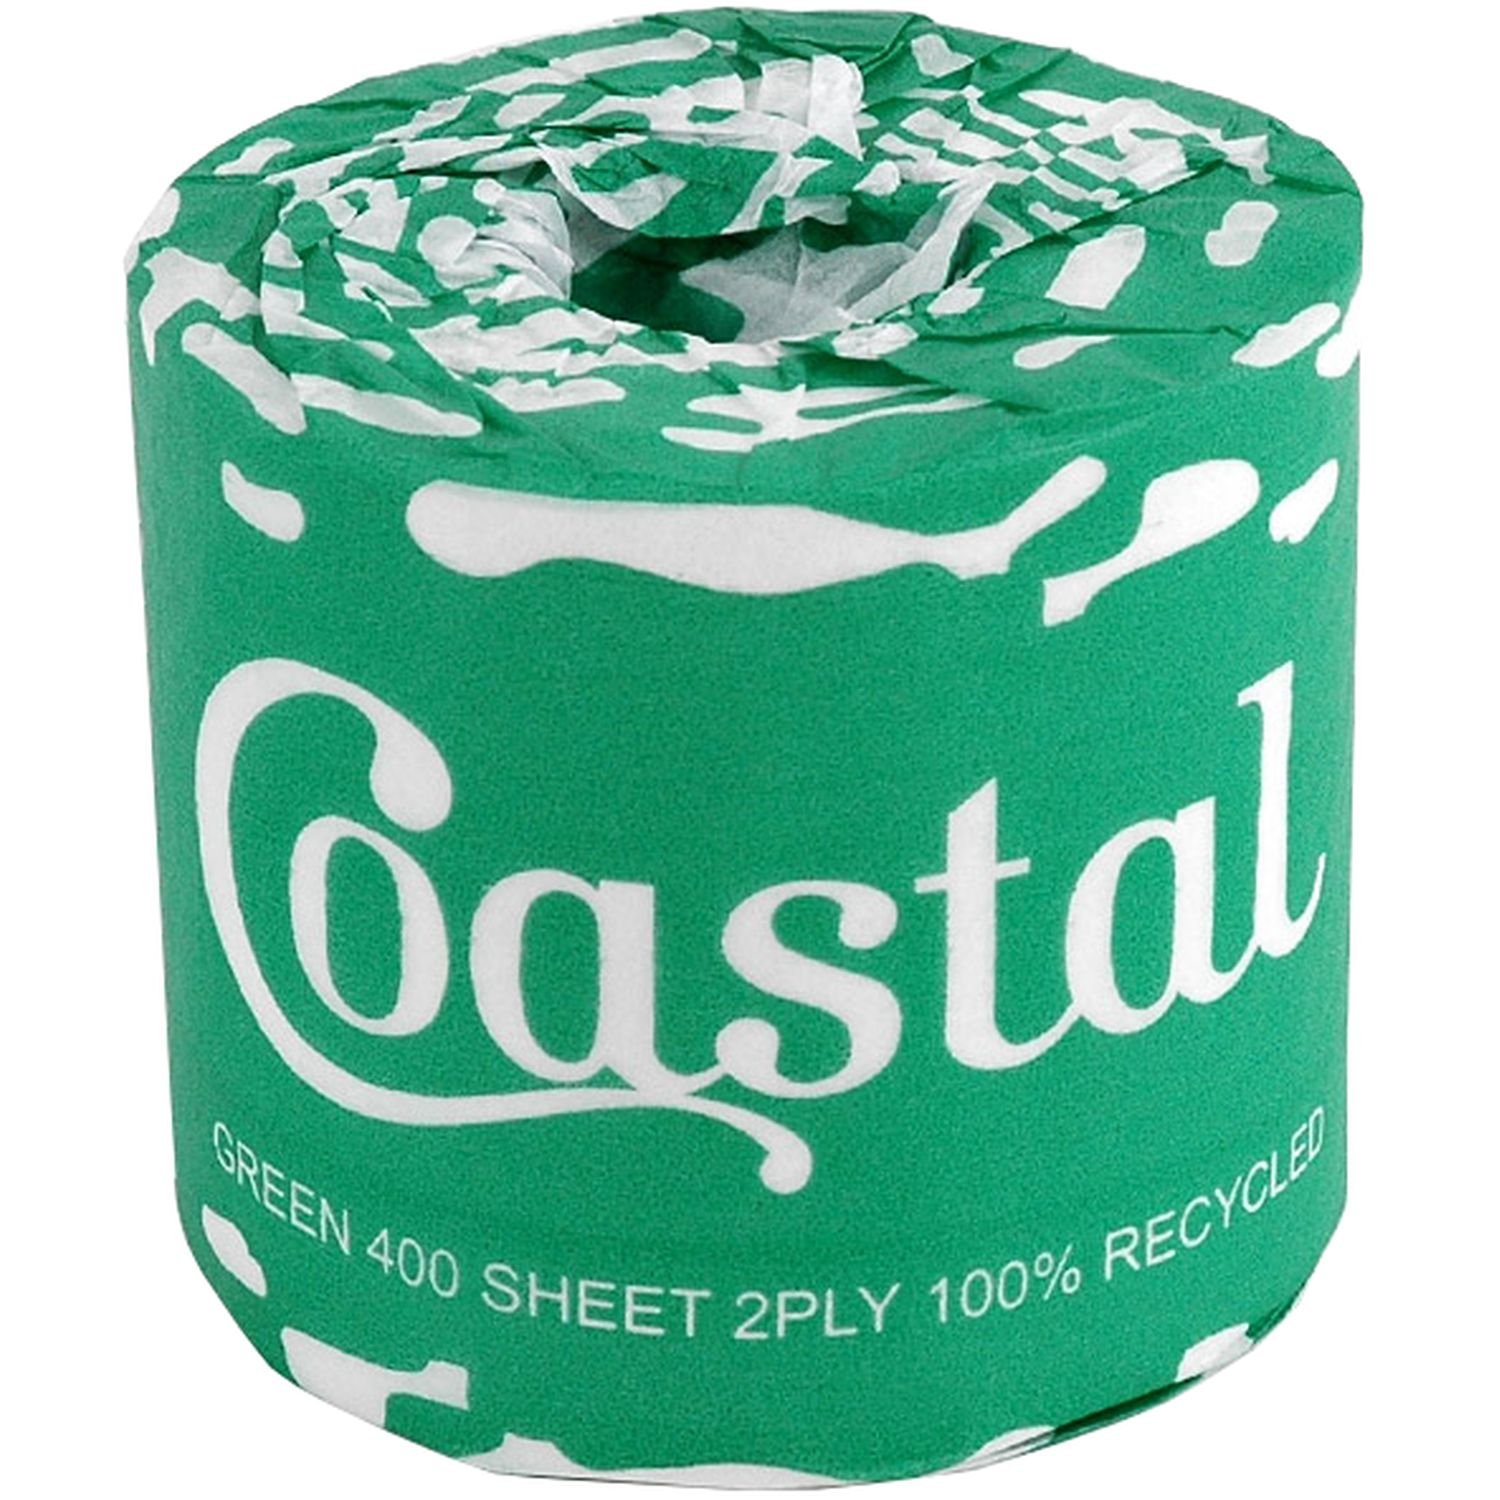 Coastal Green Recycled 400 Sheet Toilet Roll x 48 Ctn